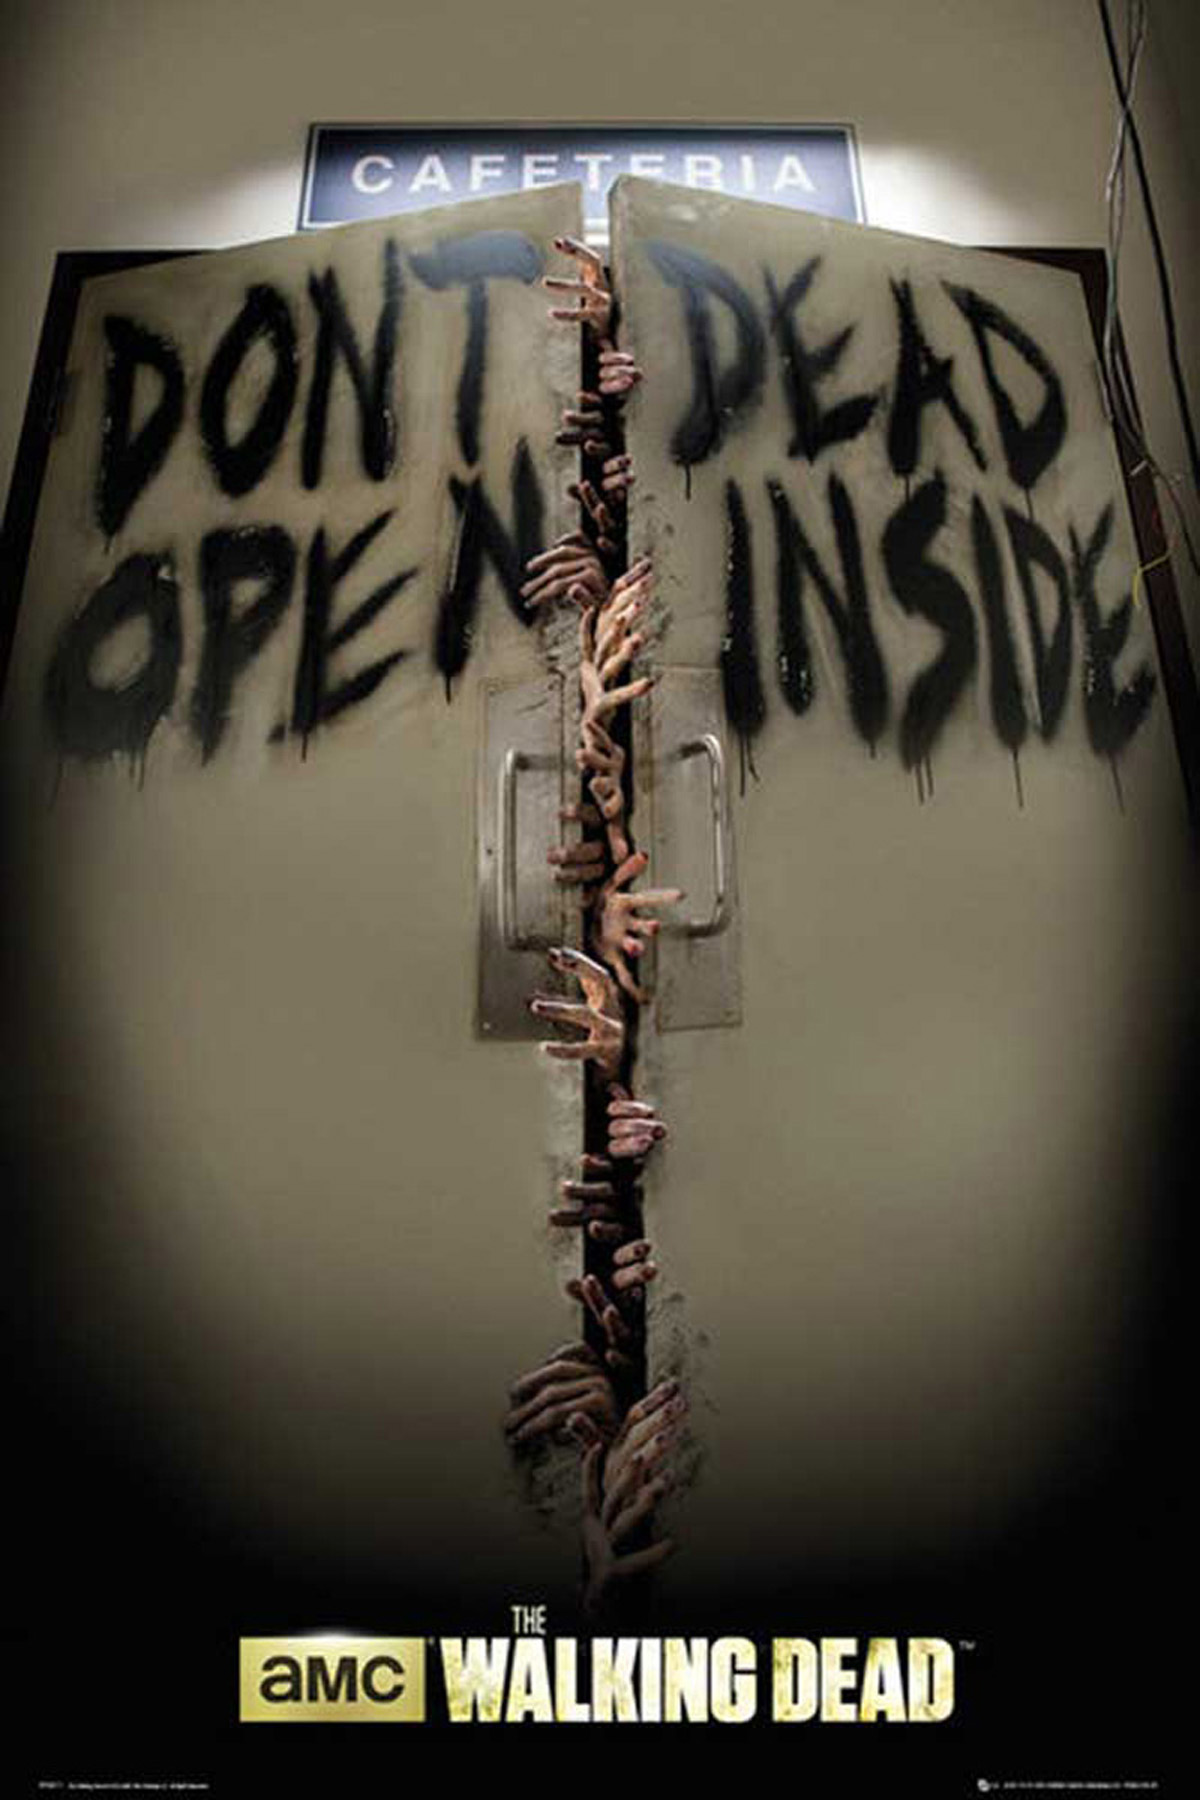 Walking Dead - Keep Out